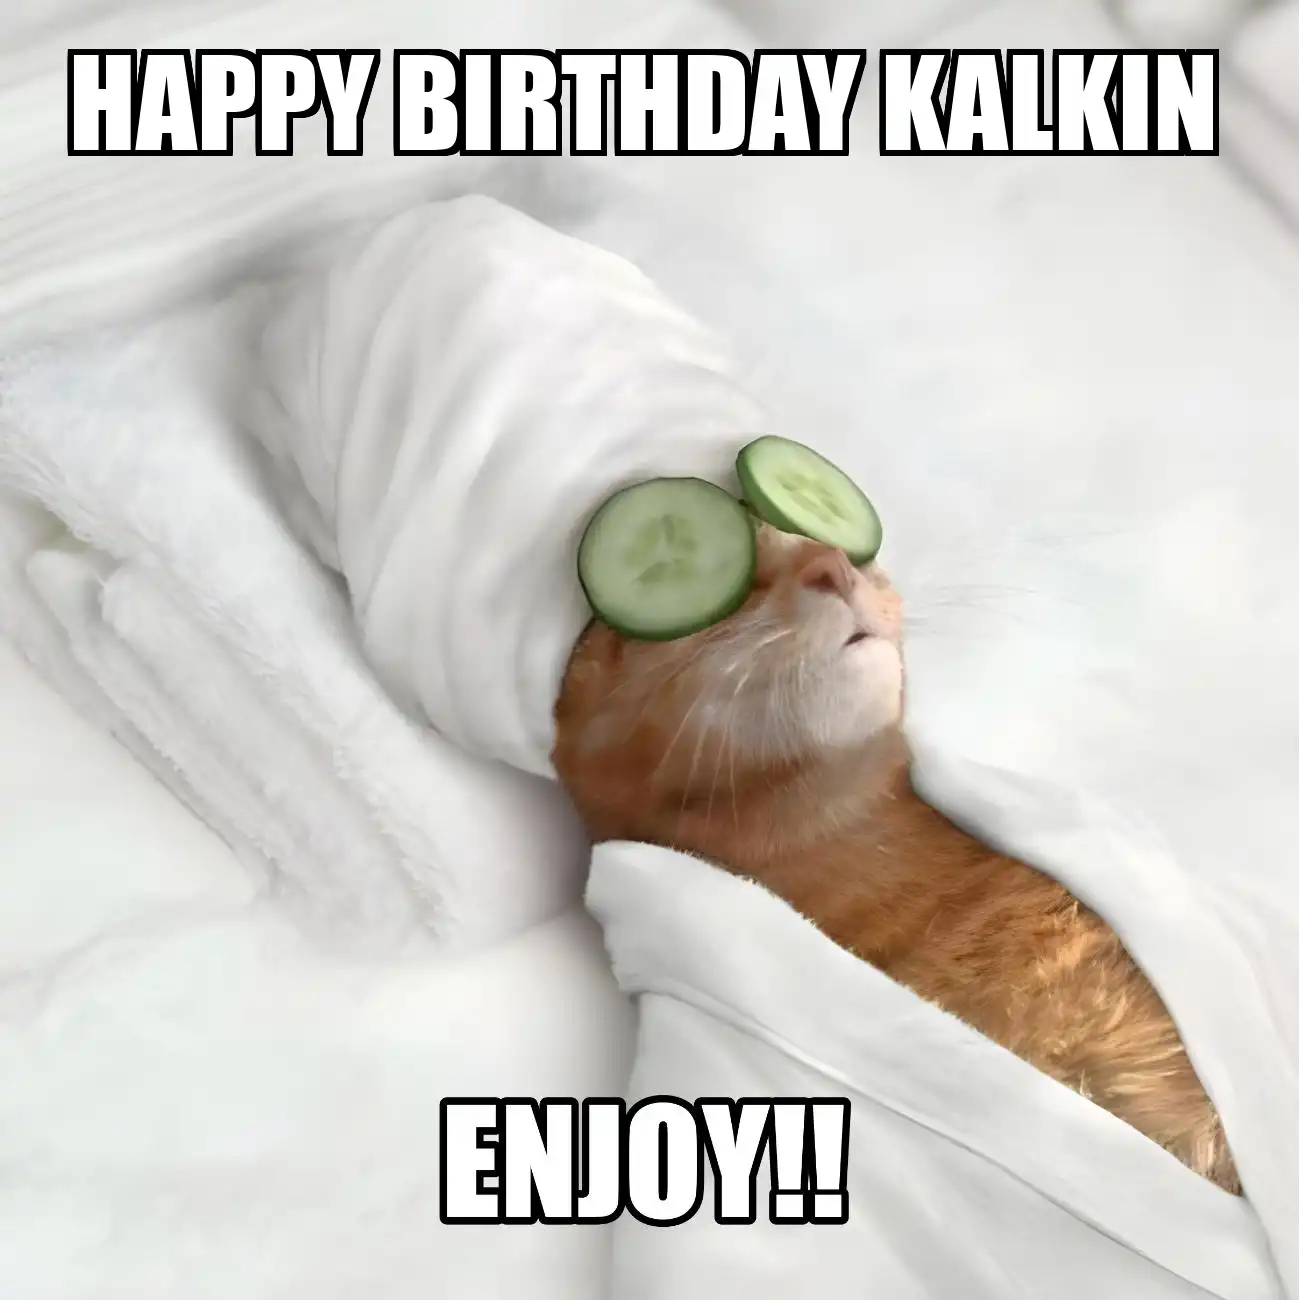 Happy Birthday Kalkin Enjoy Cat Meme